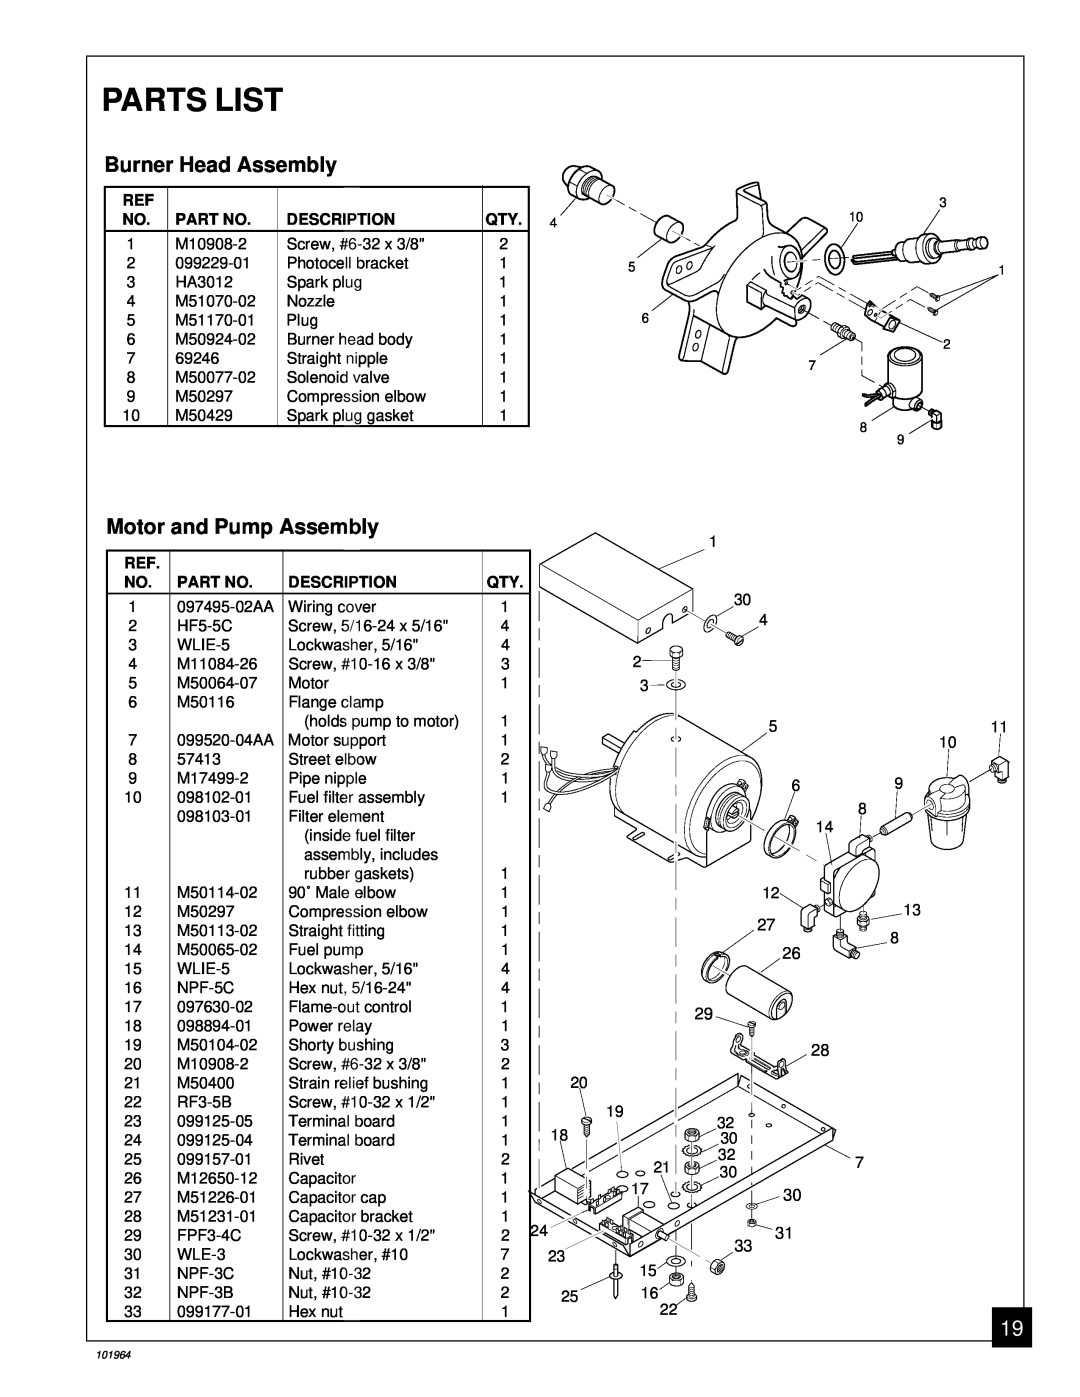 Desa B350CE owner manual Parts List, Burner Head Assembly, Motor and Pump Assembly, Description, Qty 